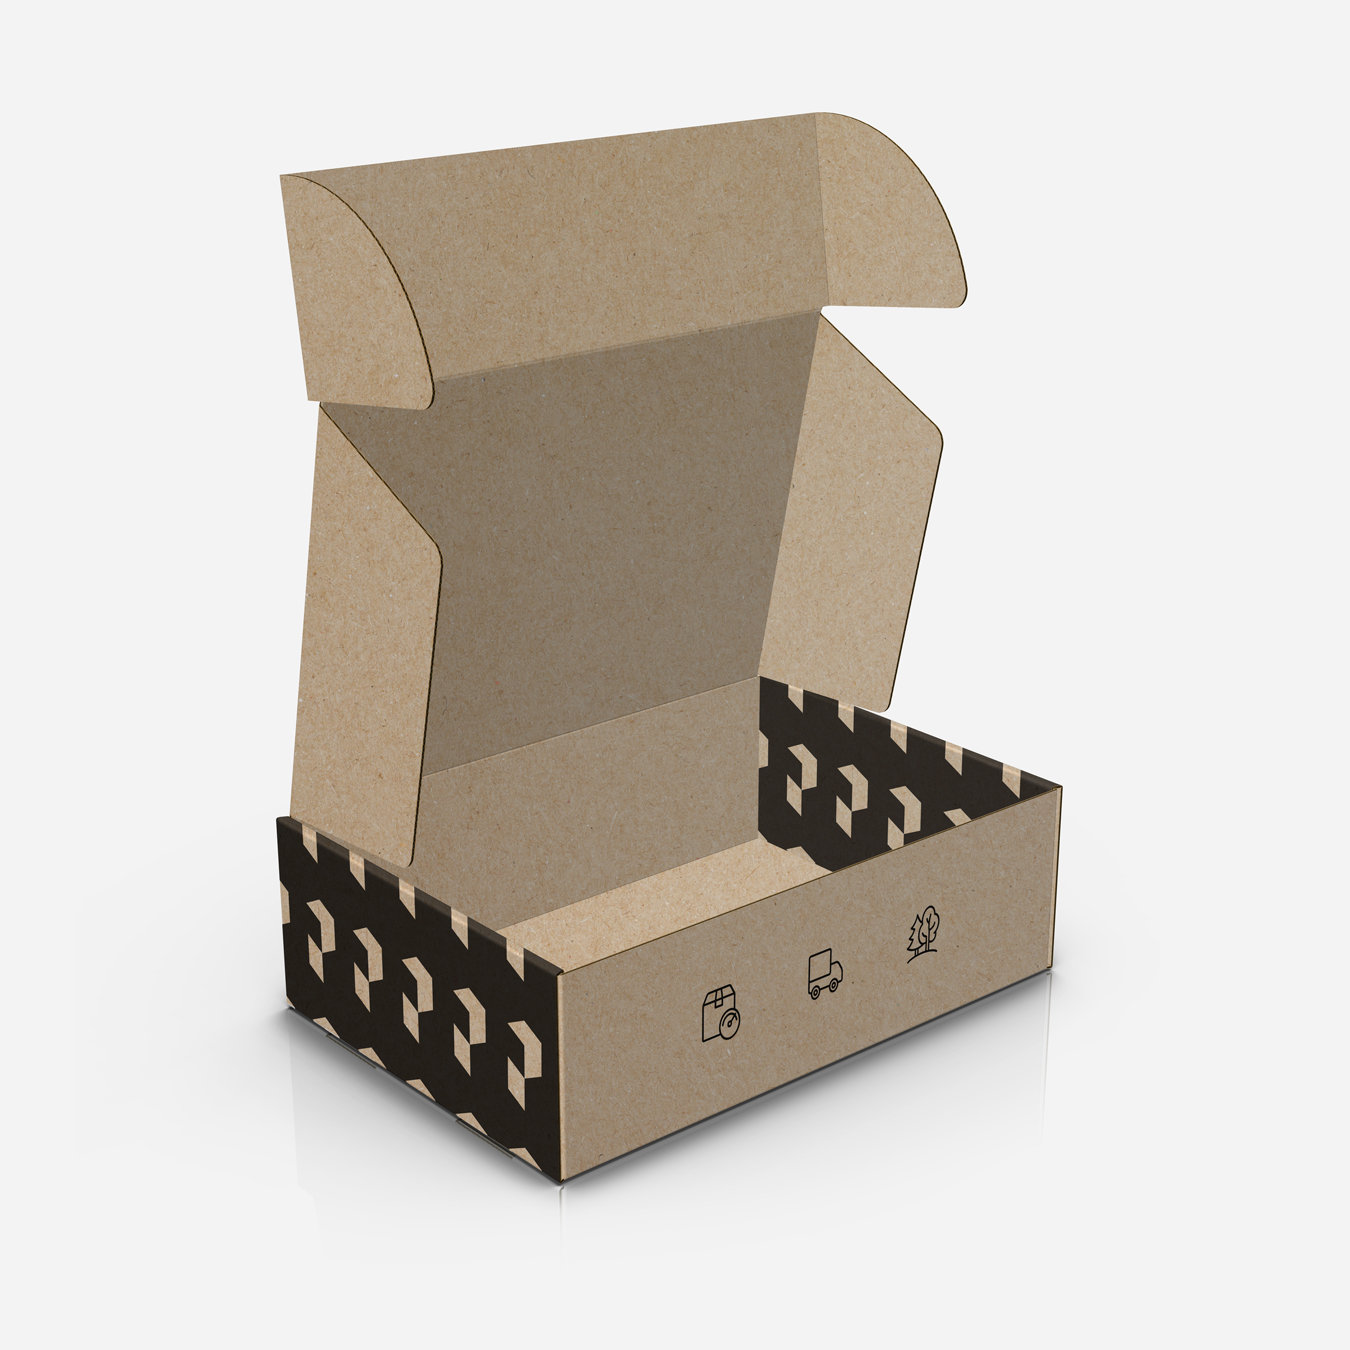 Black printing box, mailer box printing - custom box printing uk.